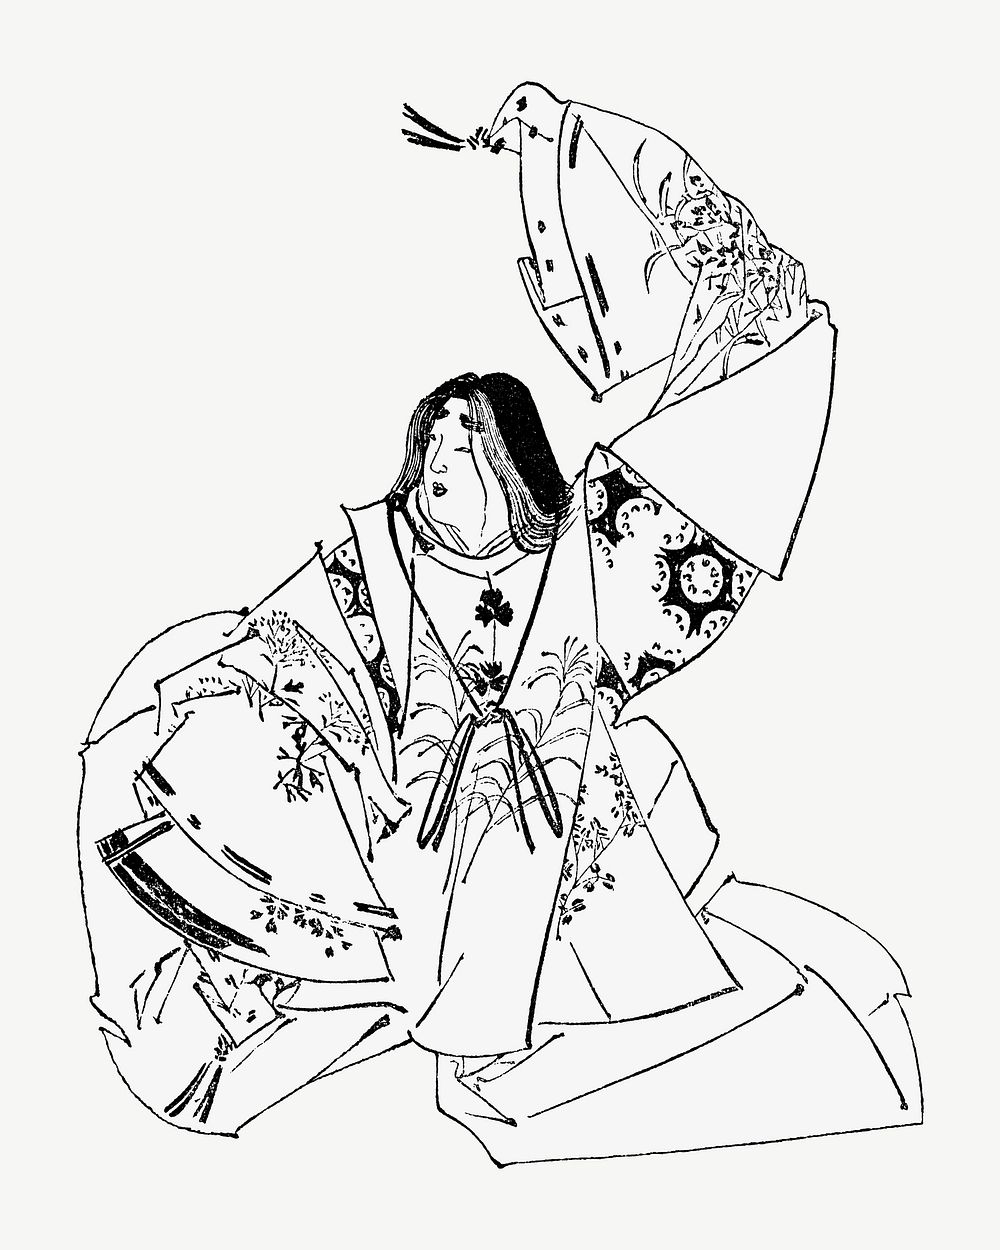 Geisha woman, Japanese illustration psd. Remixed by rawpixel.